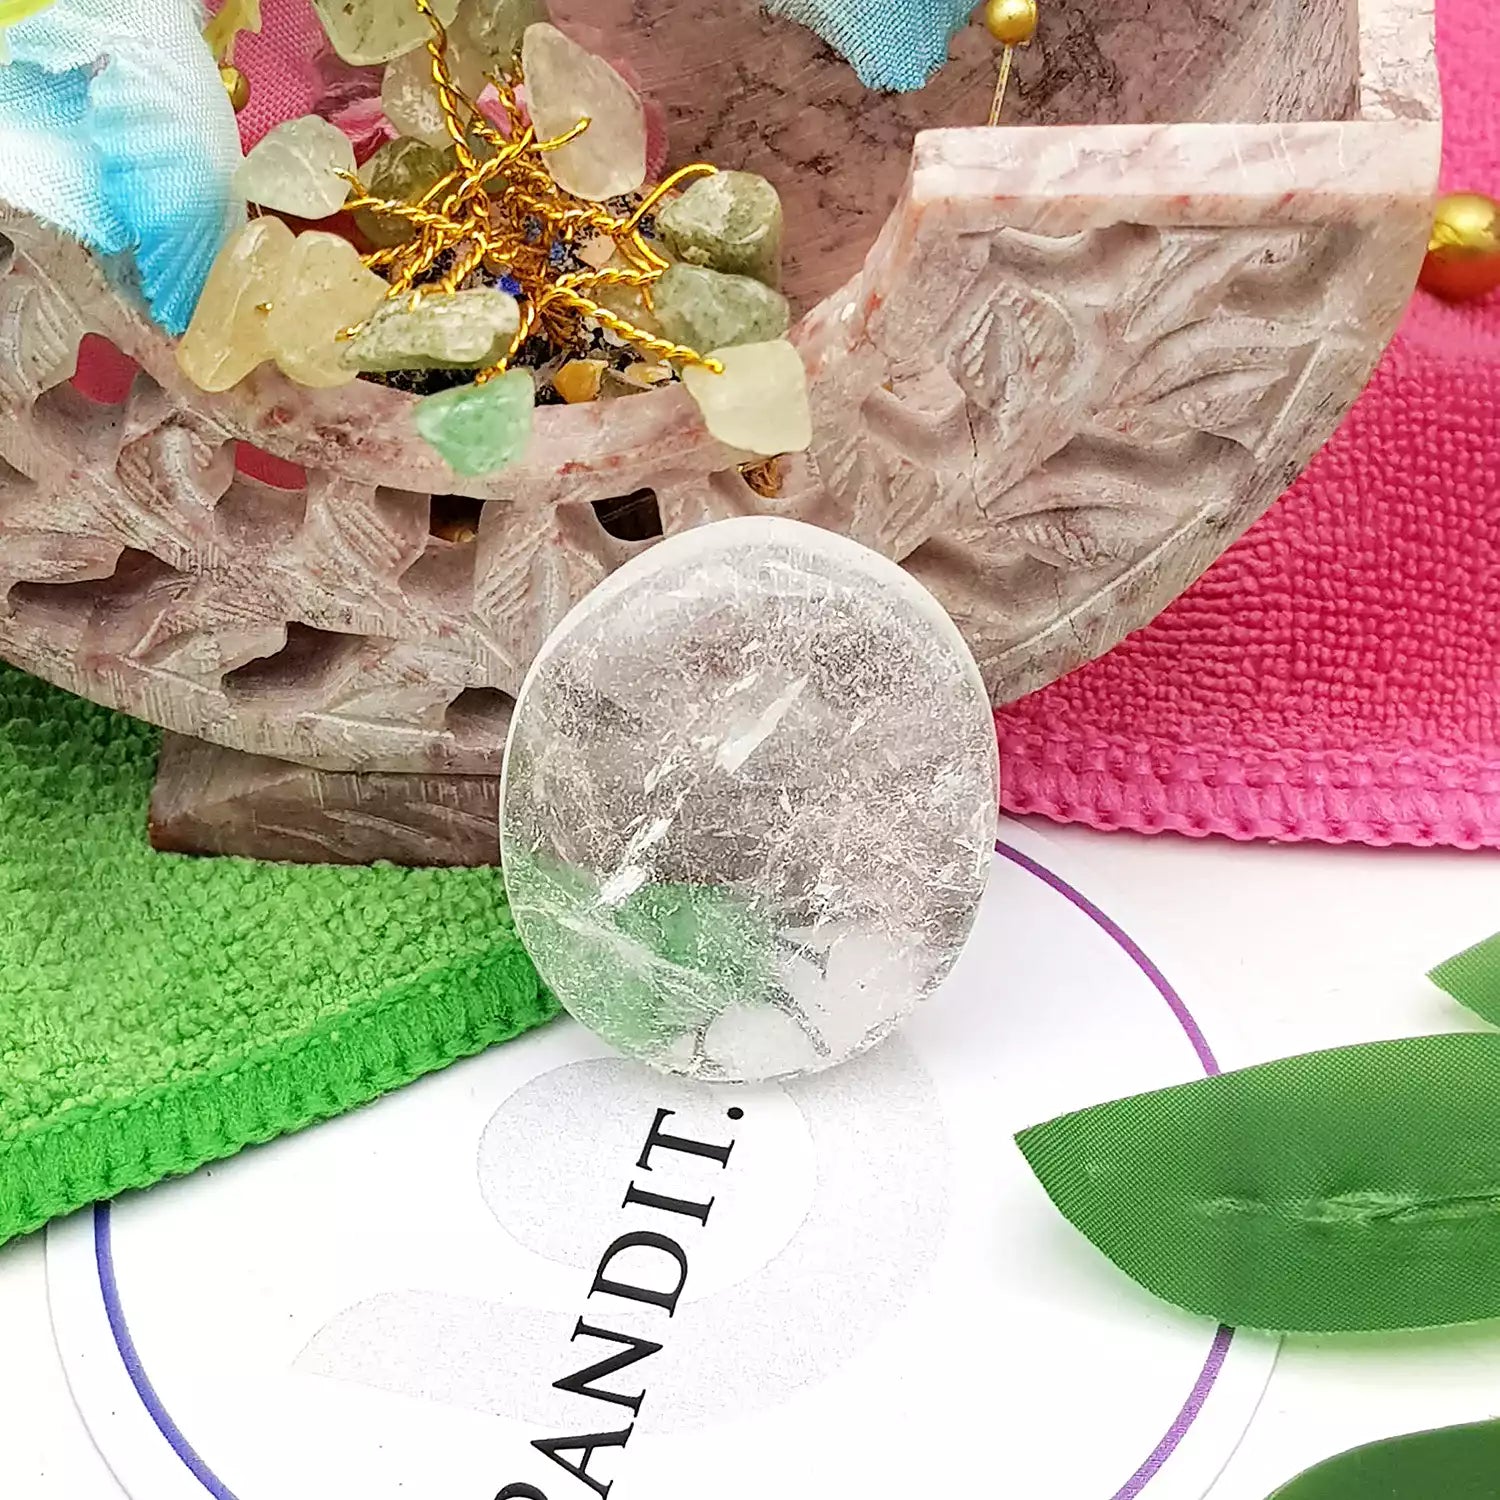 Crystal Quartz Worry Stone